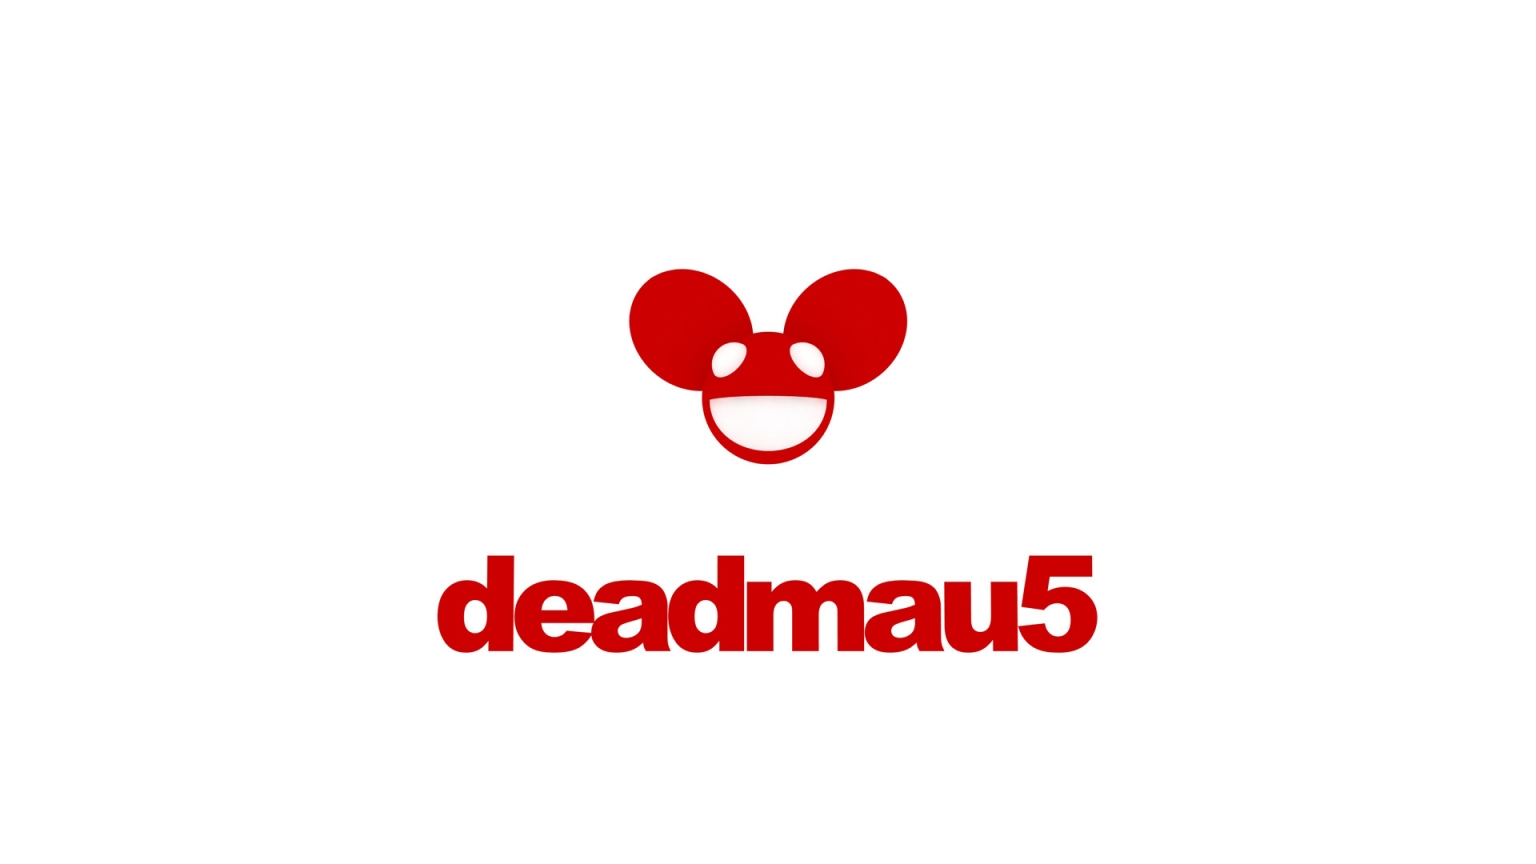 Deadmau5 Logo for 1536 x 864 HDTV resolution